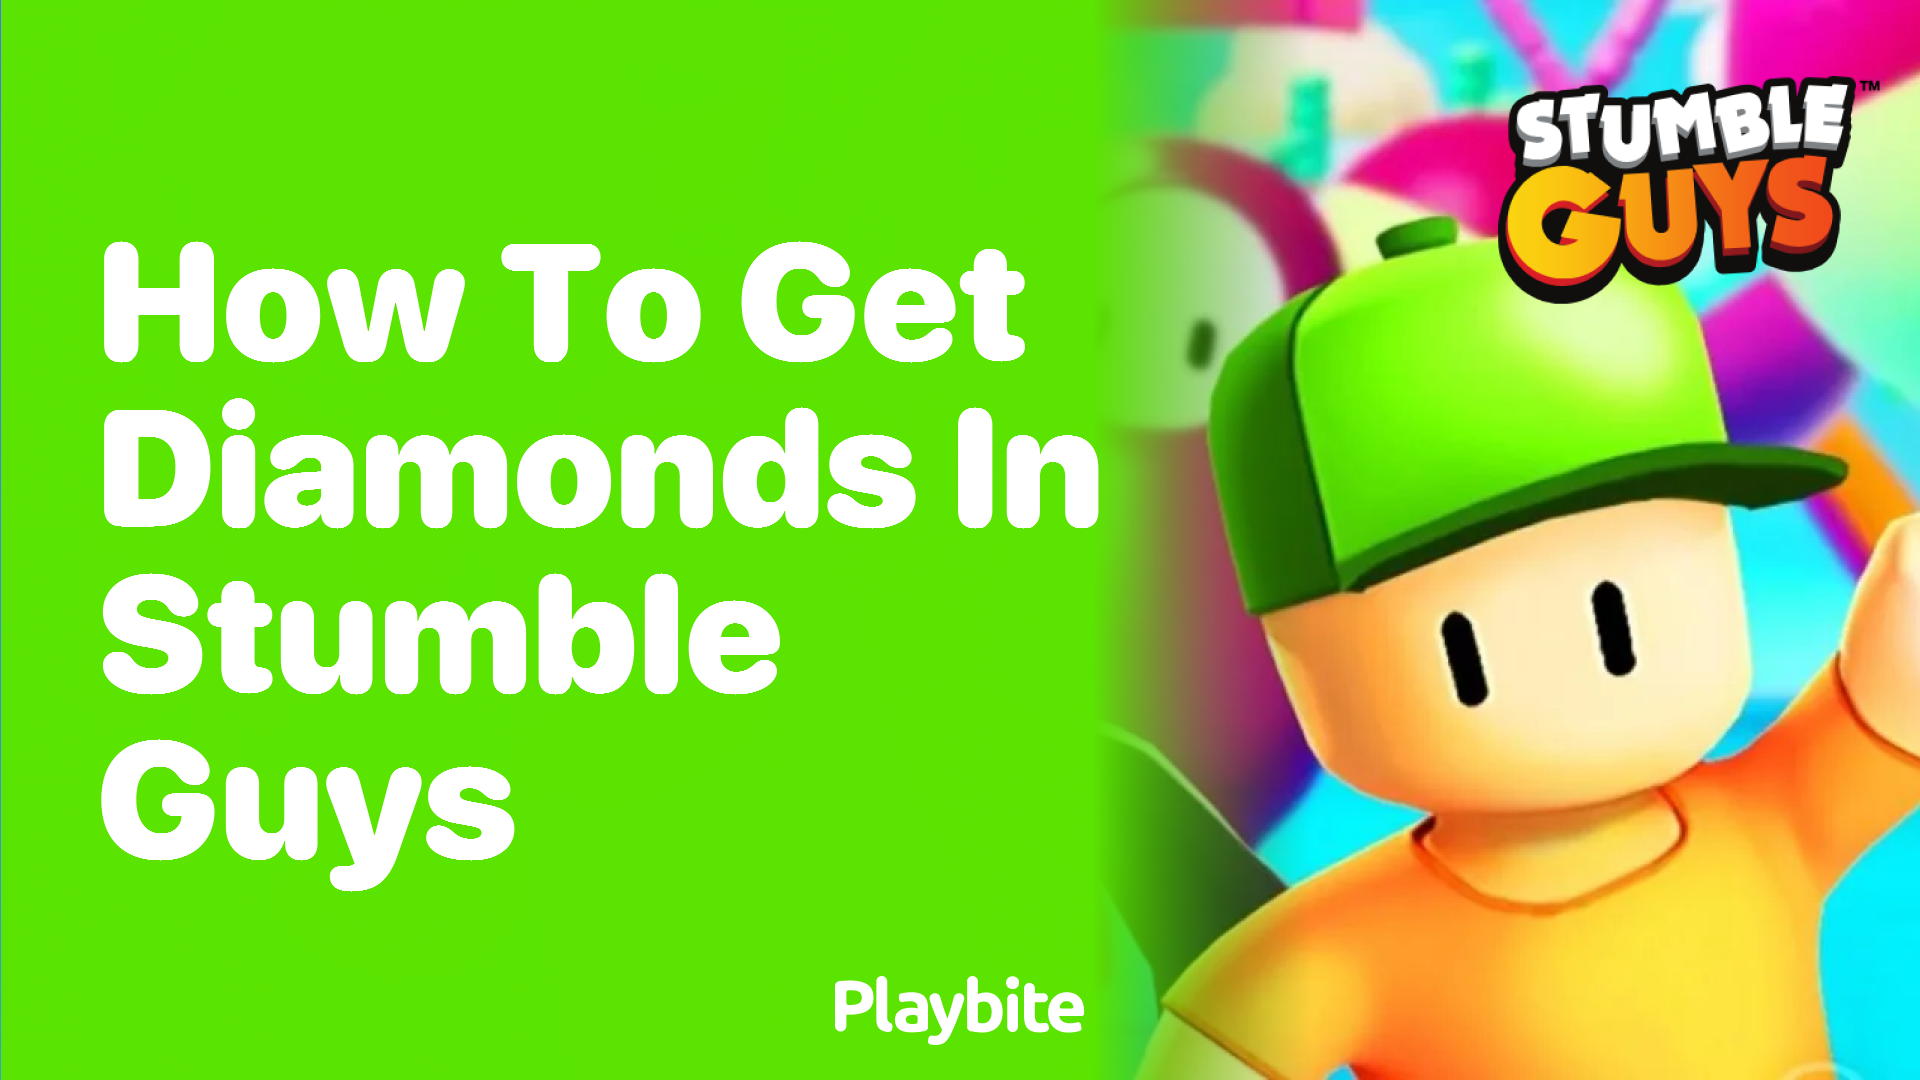 How to Get Diamonds in Stumble Guys